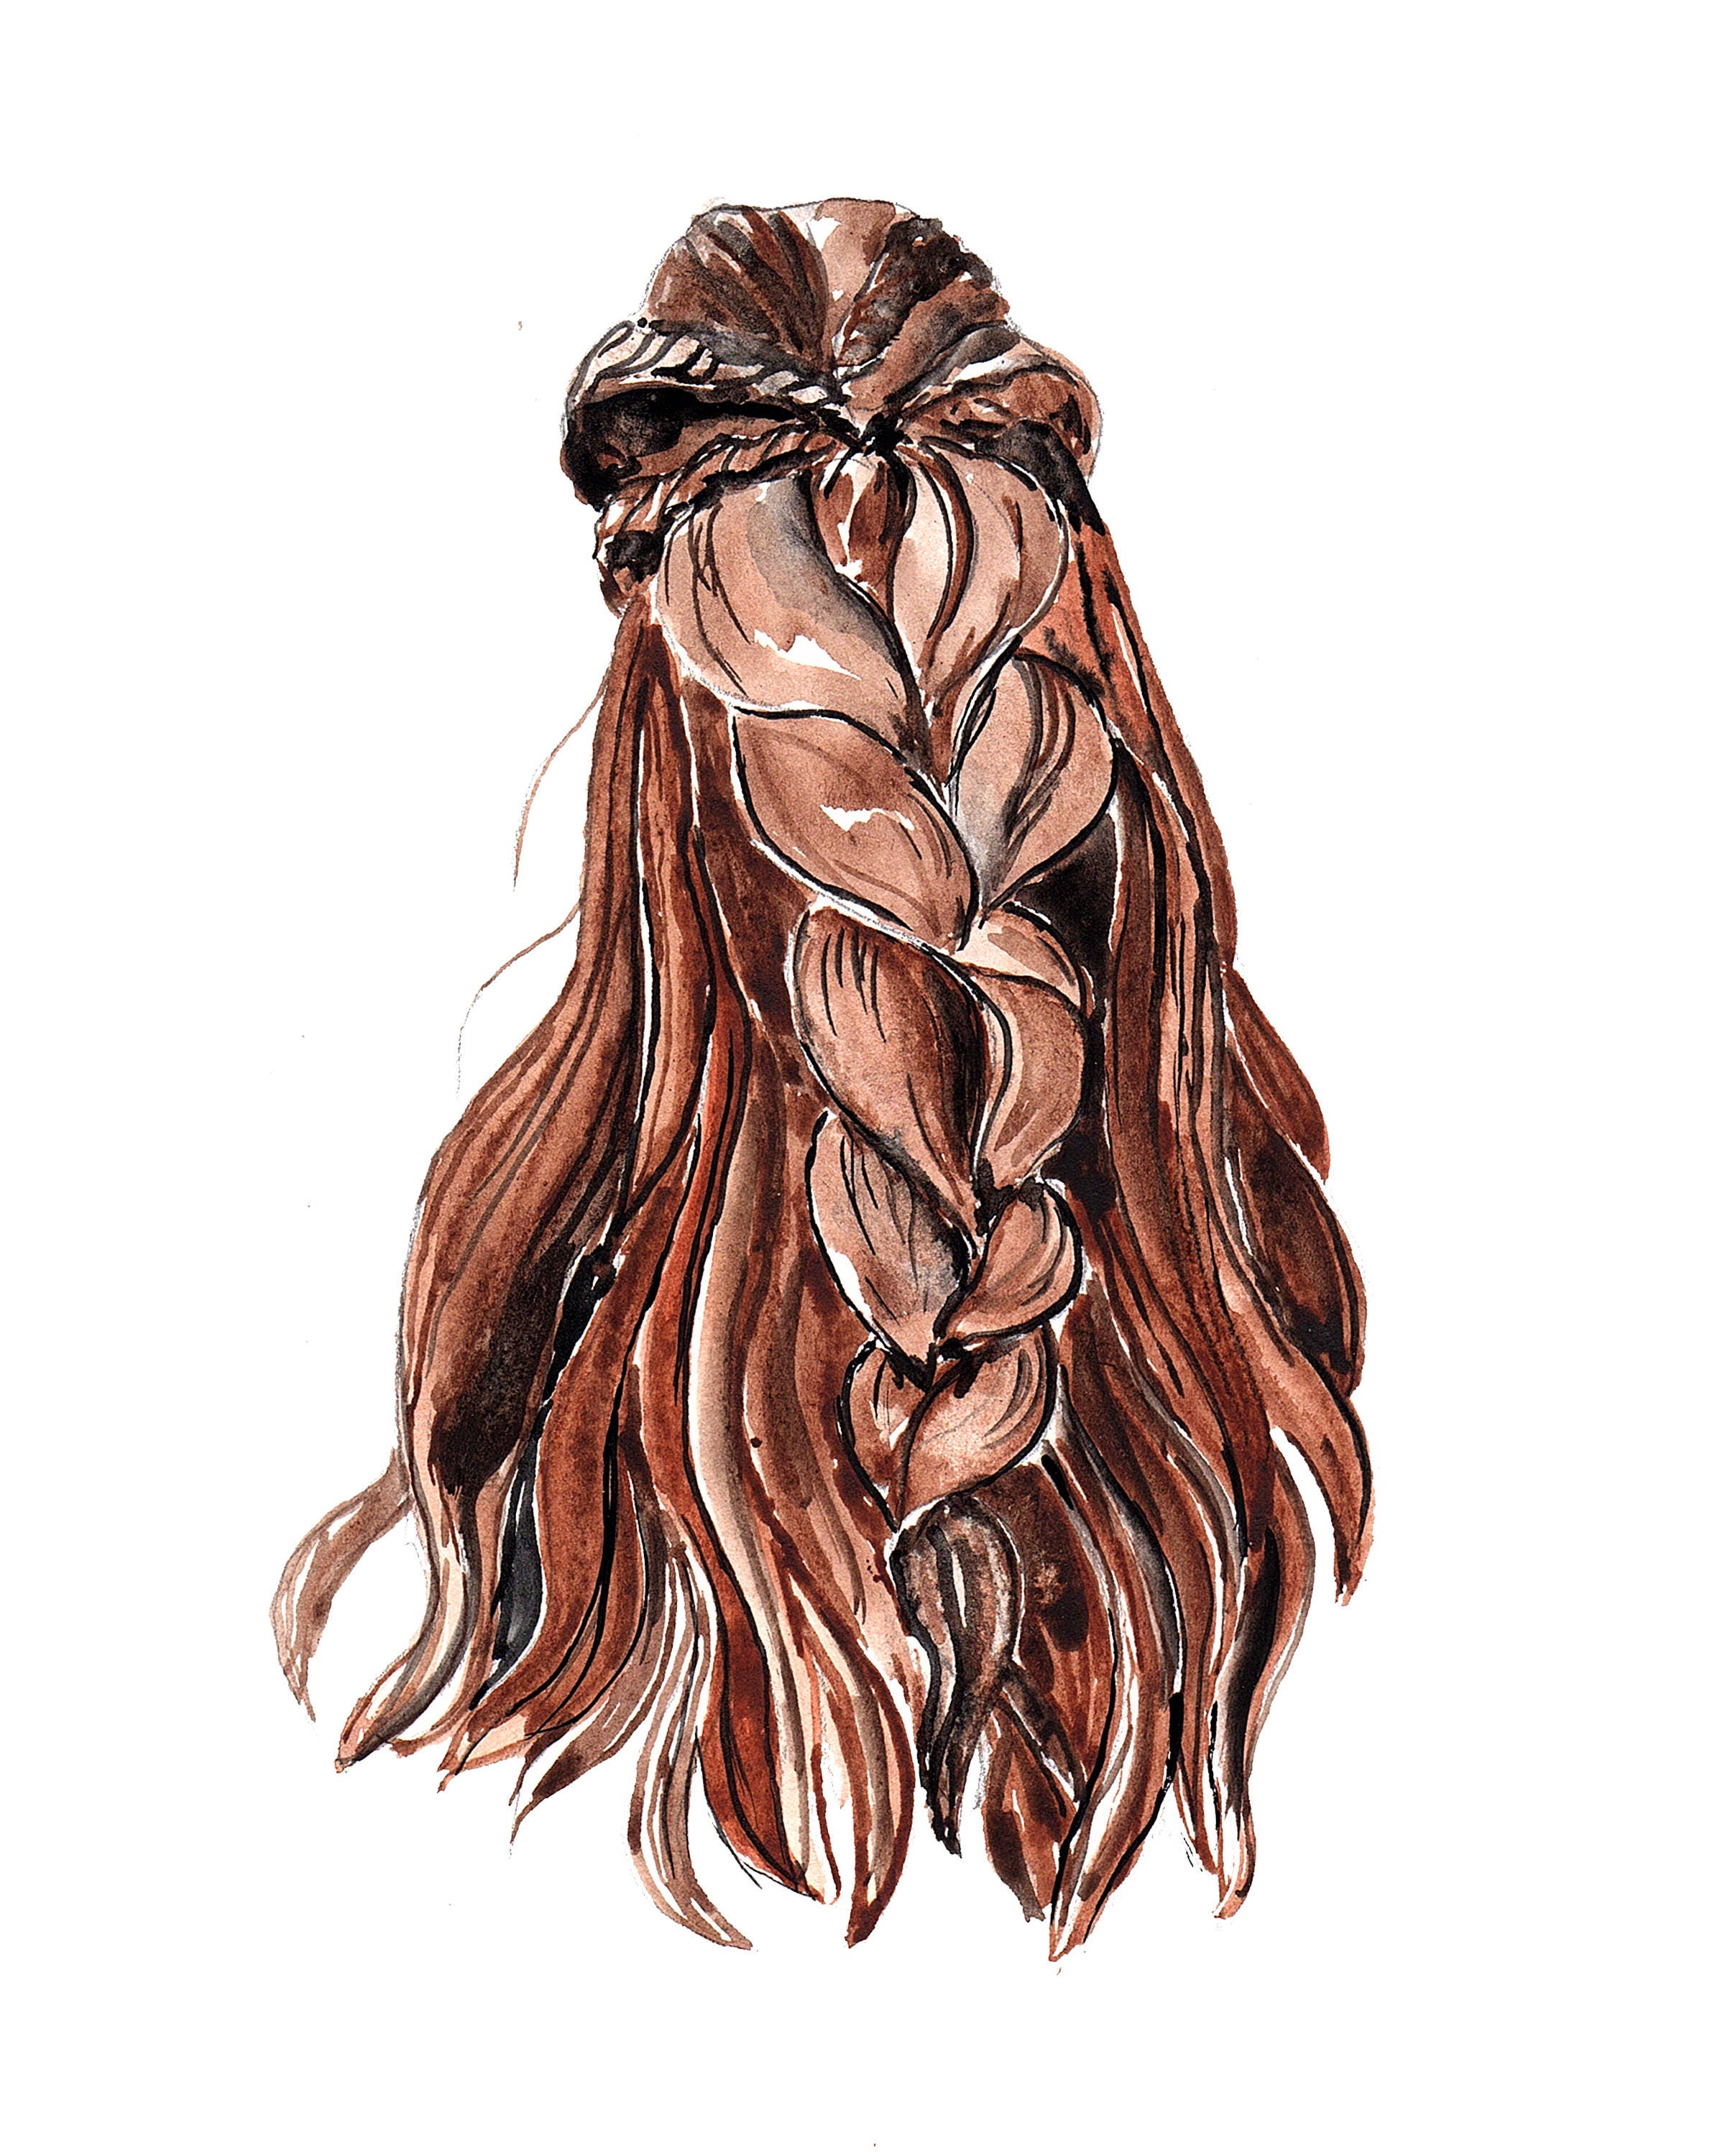 Brown Long Hair Braid Art Print Watercolor Ilustration 8x10 - Etsy